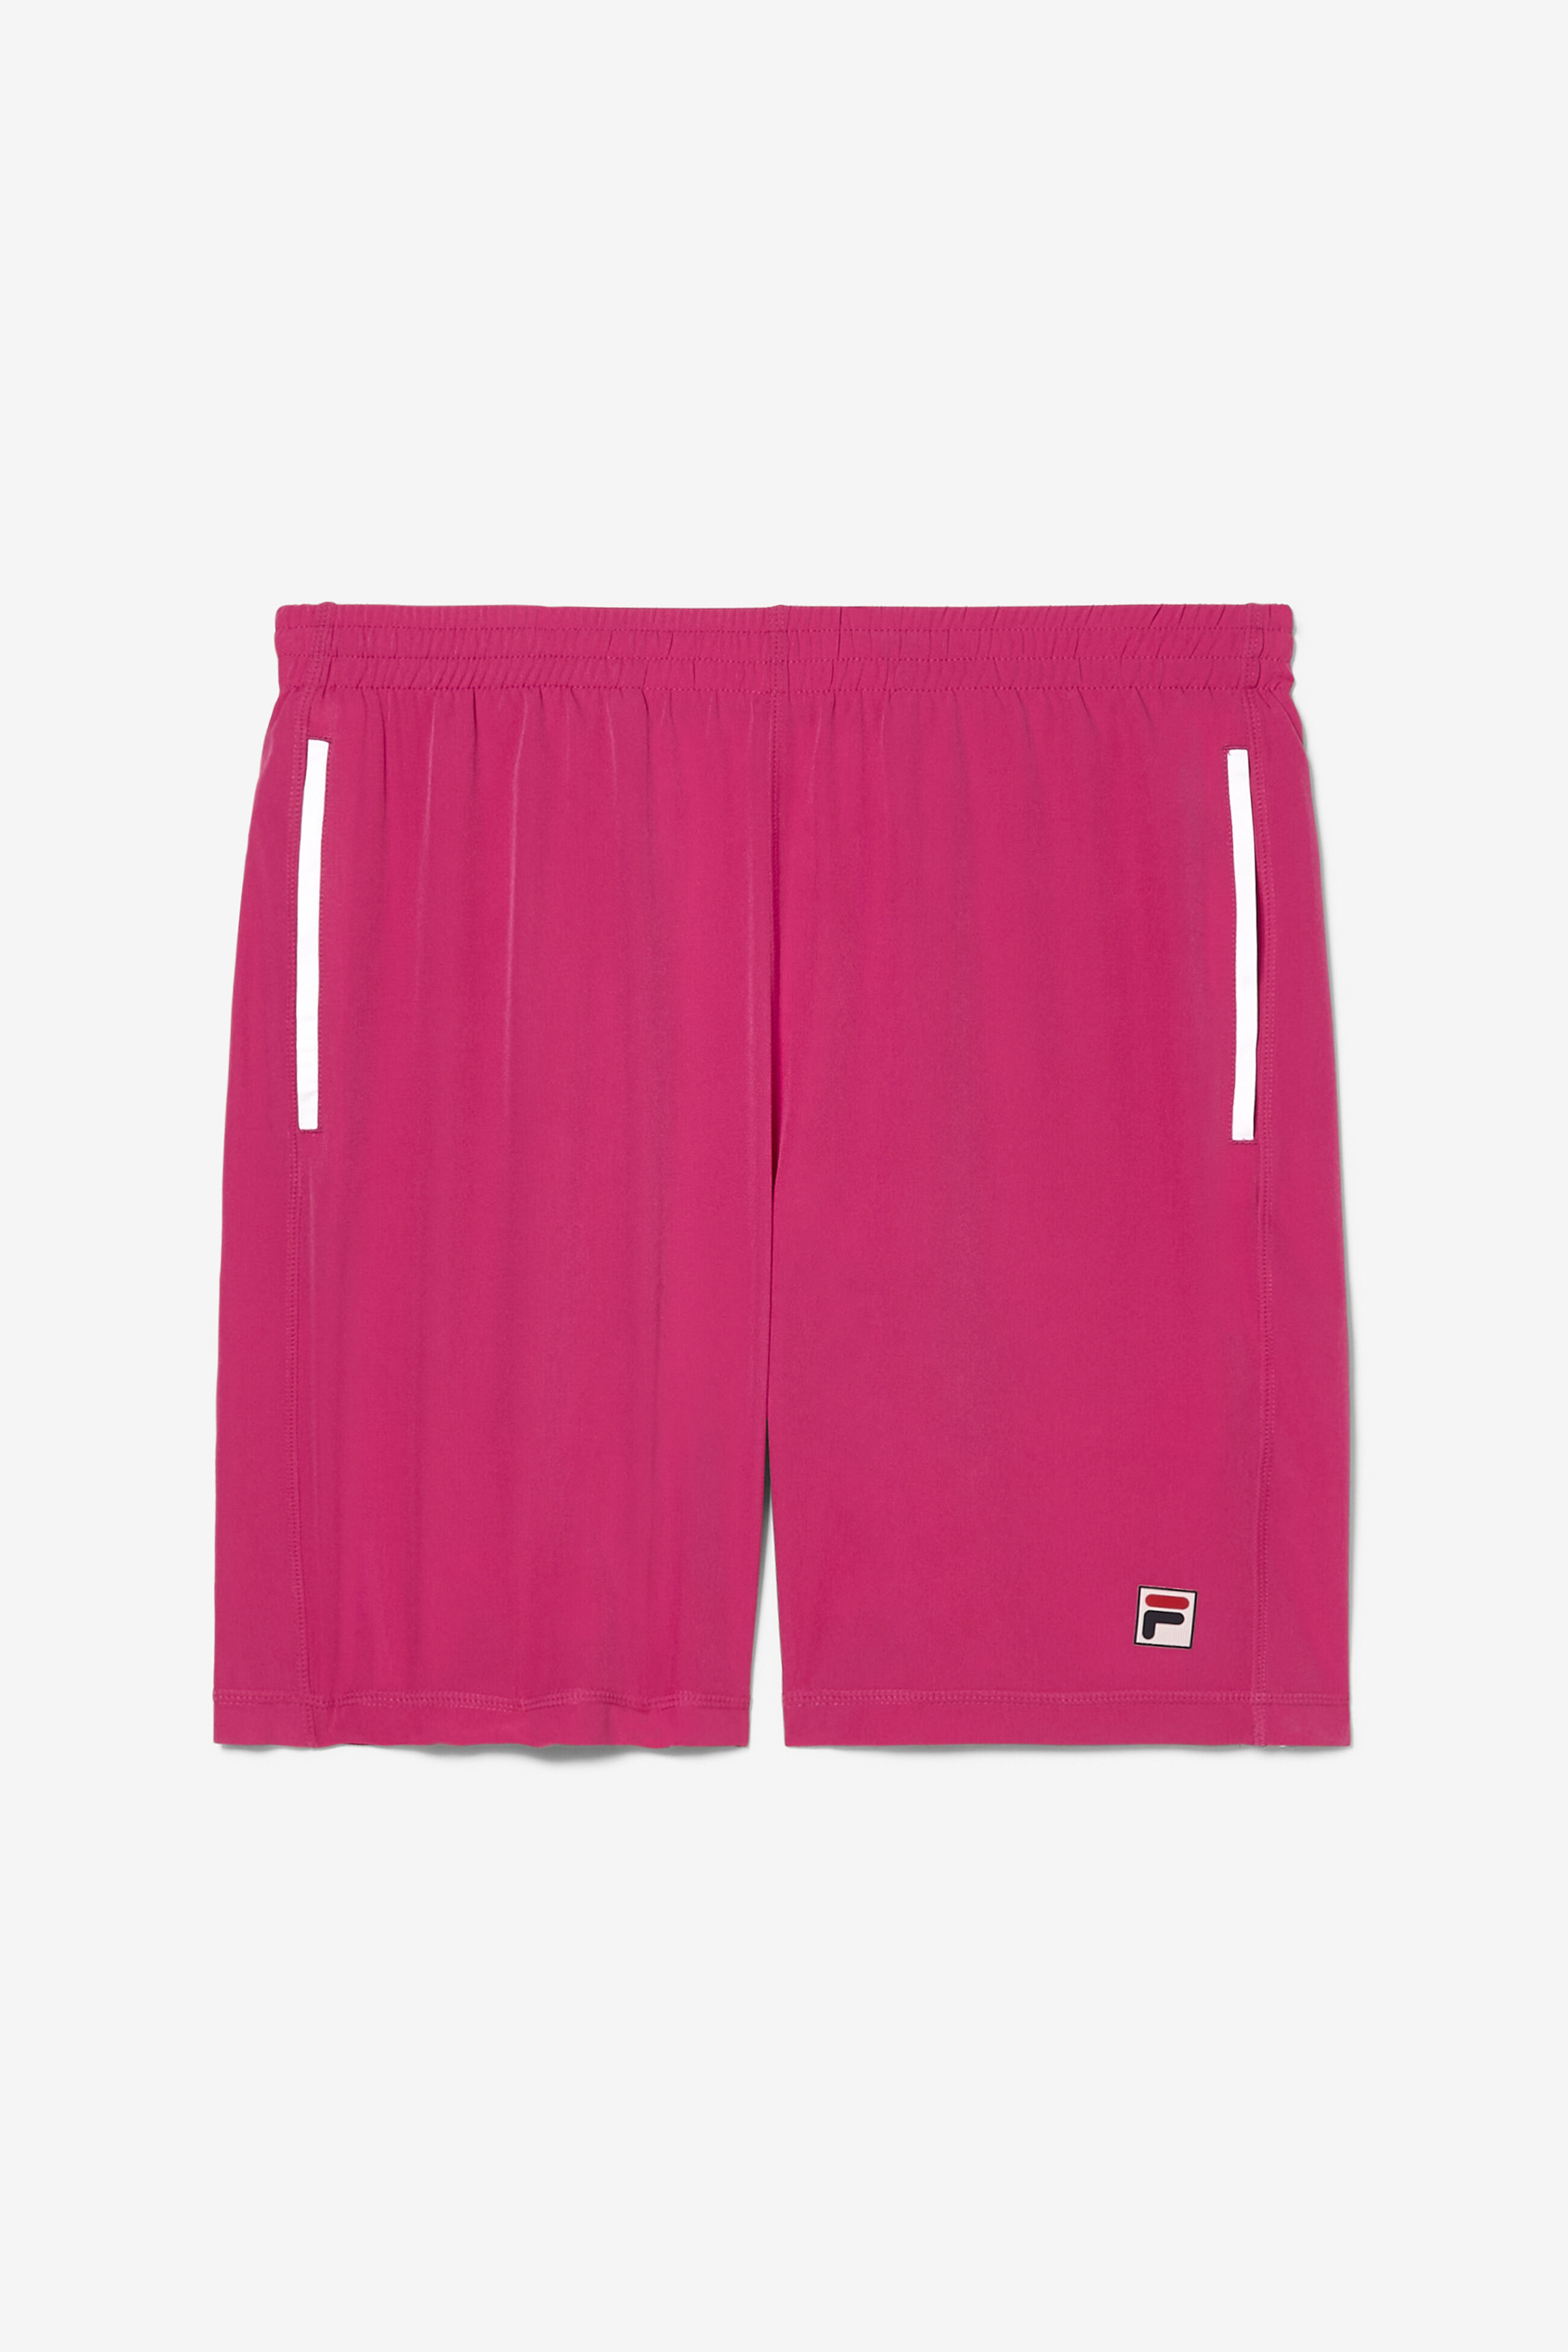 Baseline Knit Men's Tennis Shorts